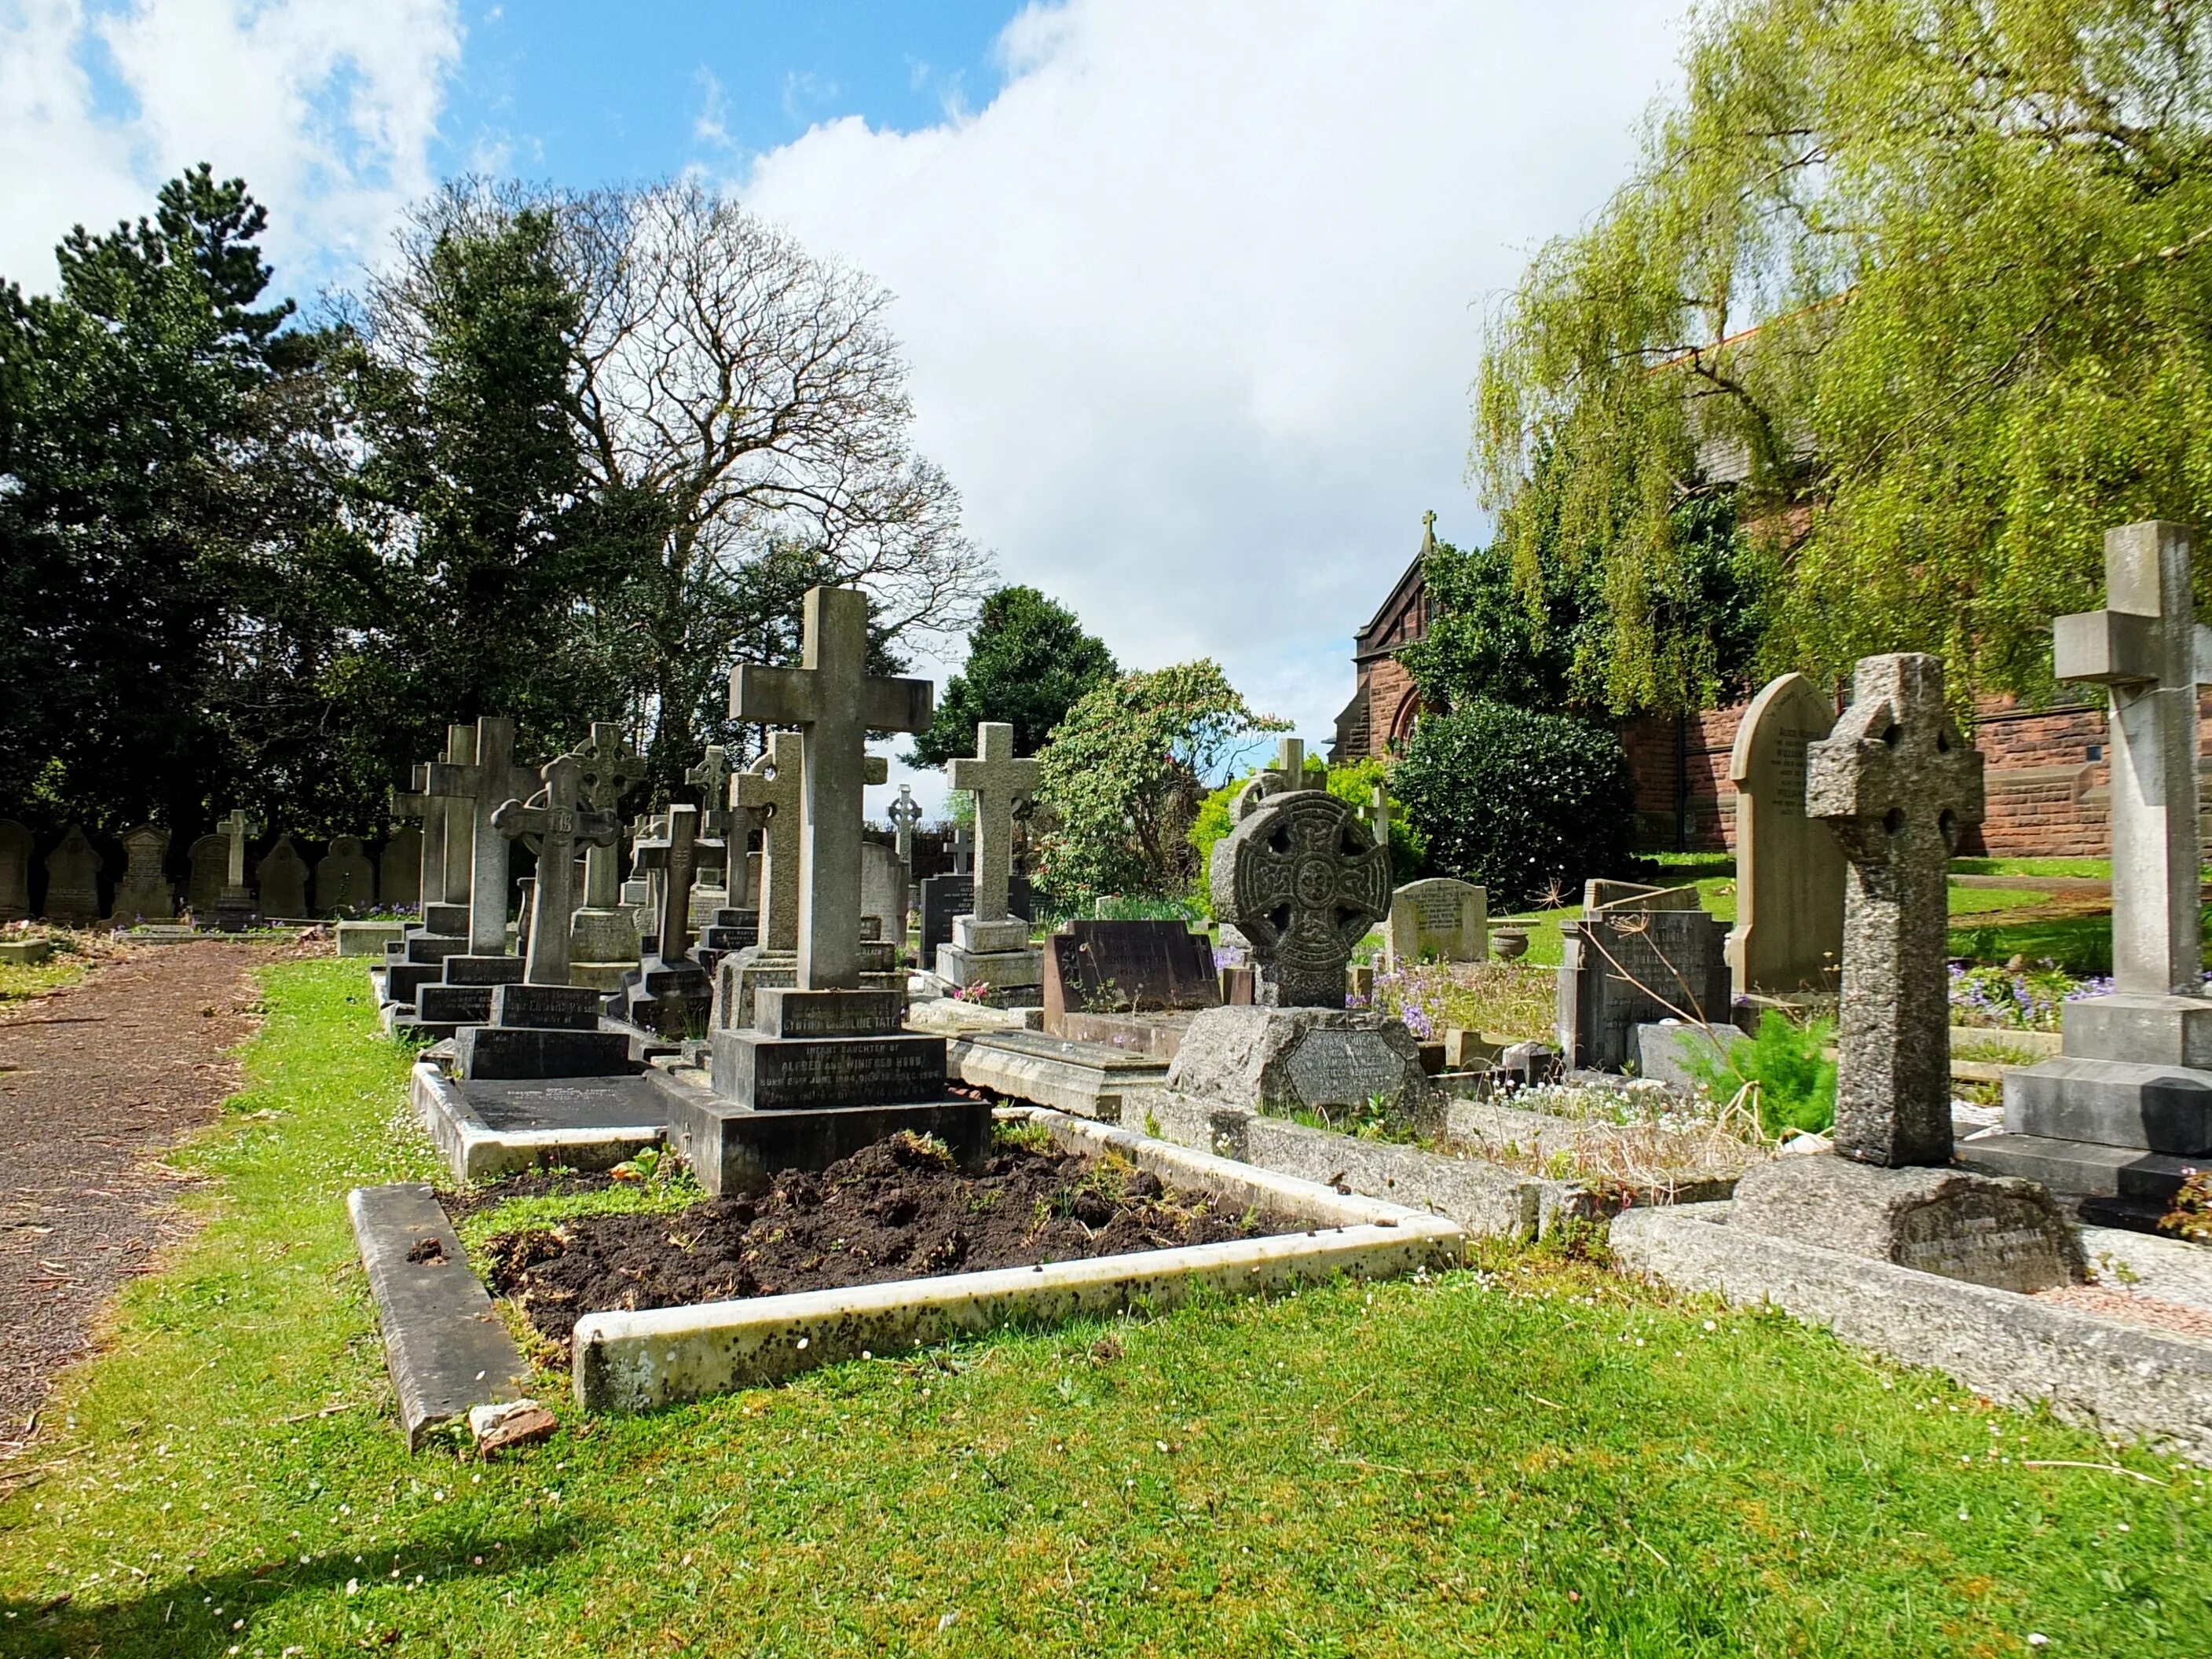 Кладбище надгробия Англия. Шолданешты кладбище. Могила Граве. Красивое кладбище. Могильные сады